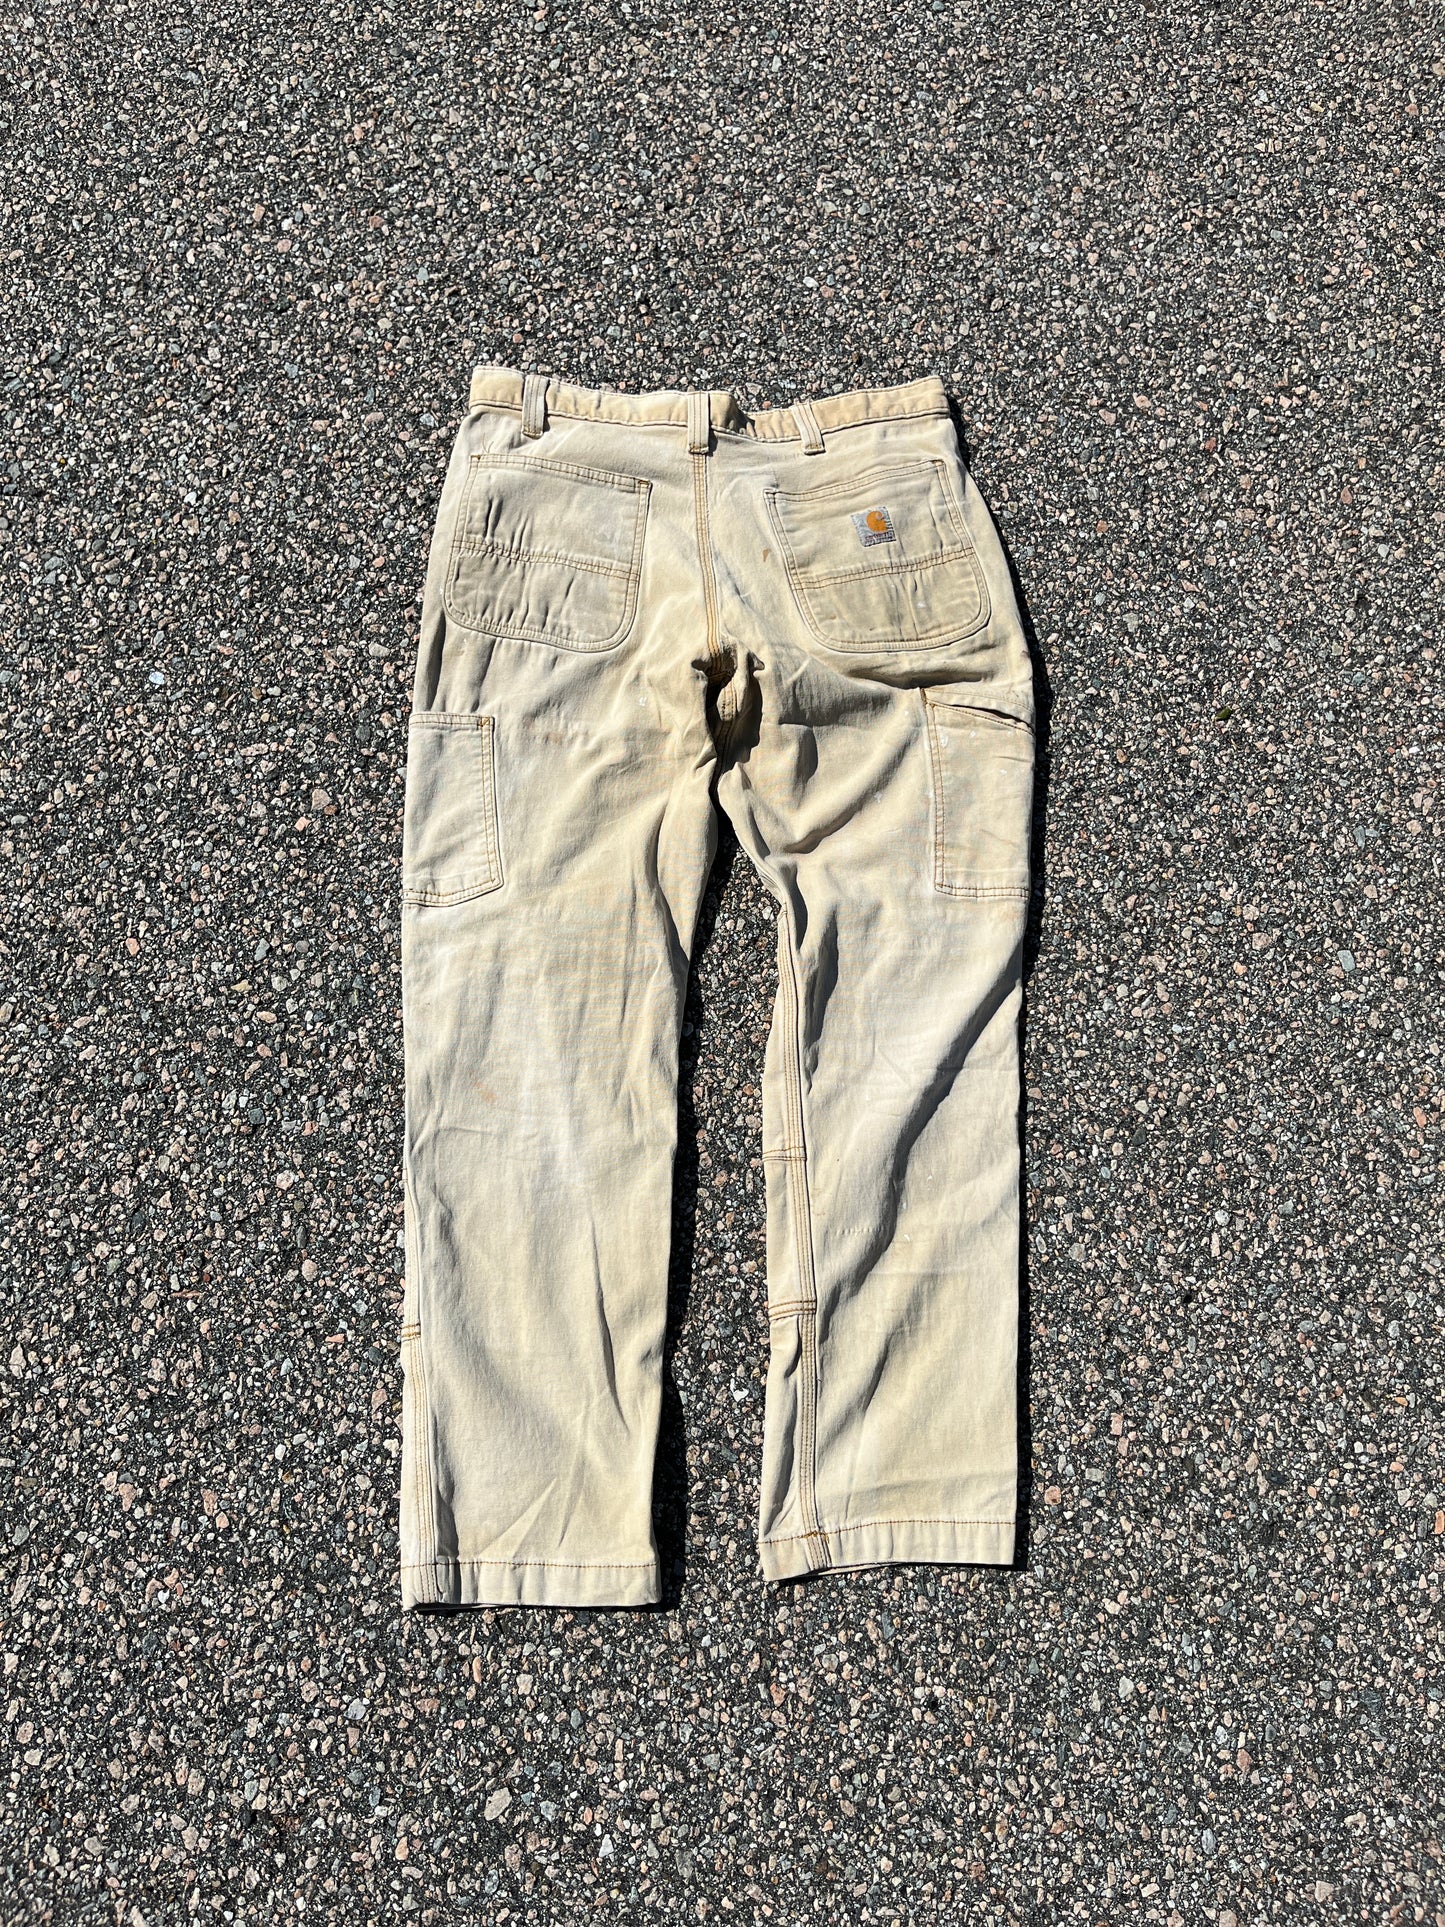 Faded Tan Carhartt Double Knee Pants - 33 x 29